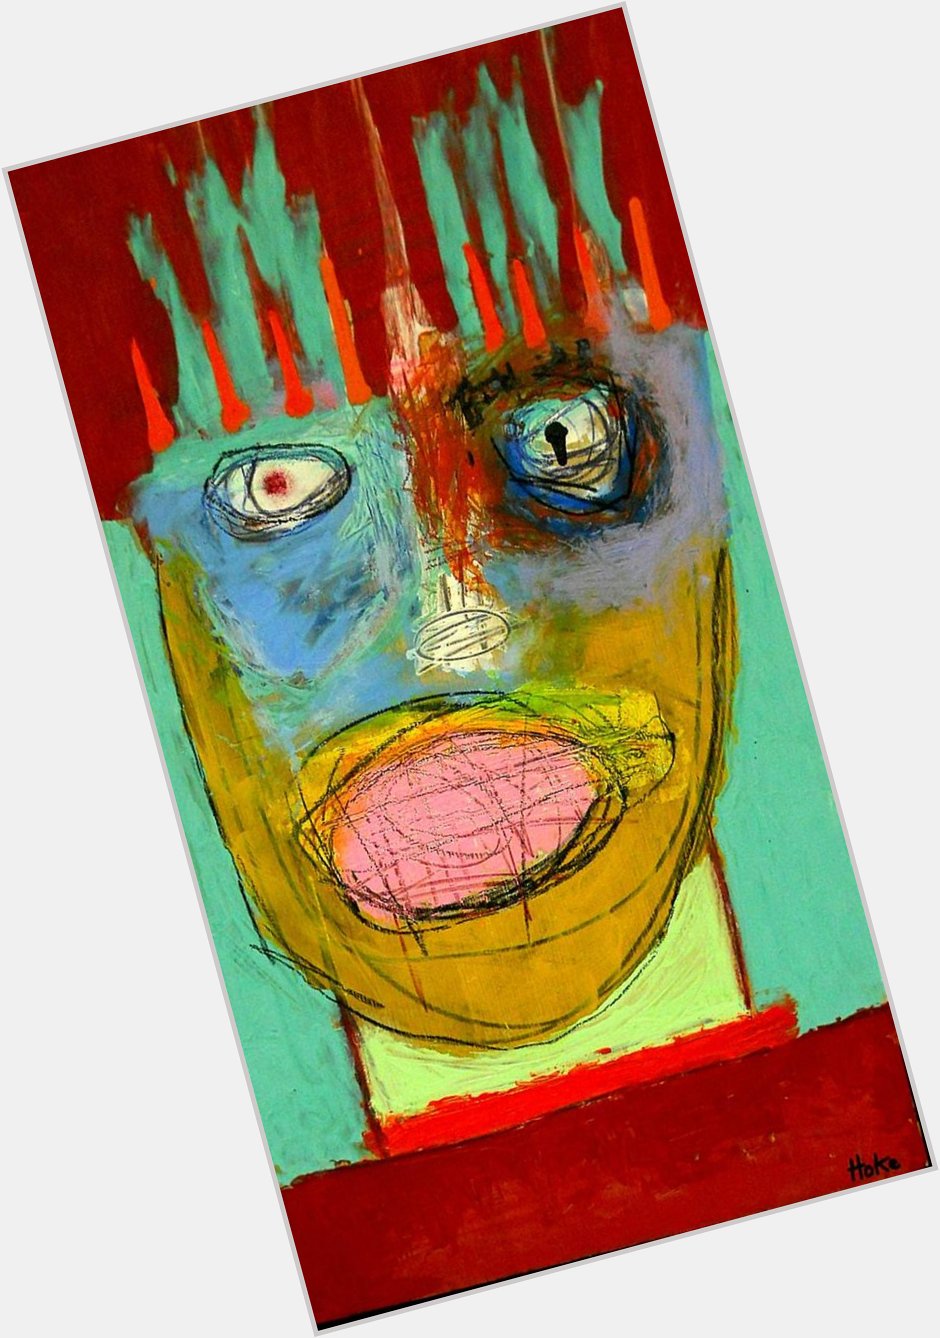 Happy Birthday to Jean-Michel!
Artist Jean-Michel Basquiat was born in Brooklyn, New York, on December 22, 1960 